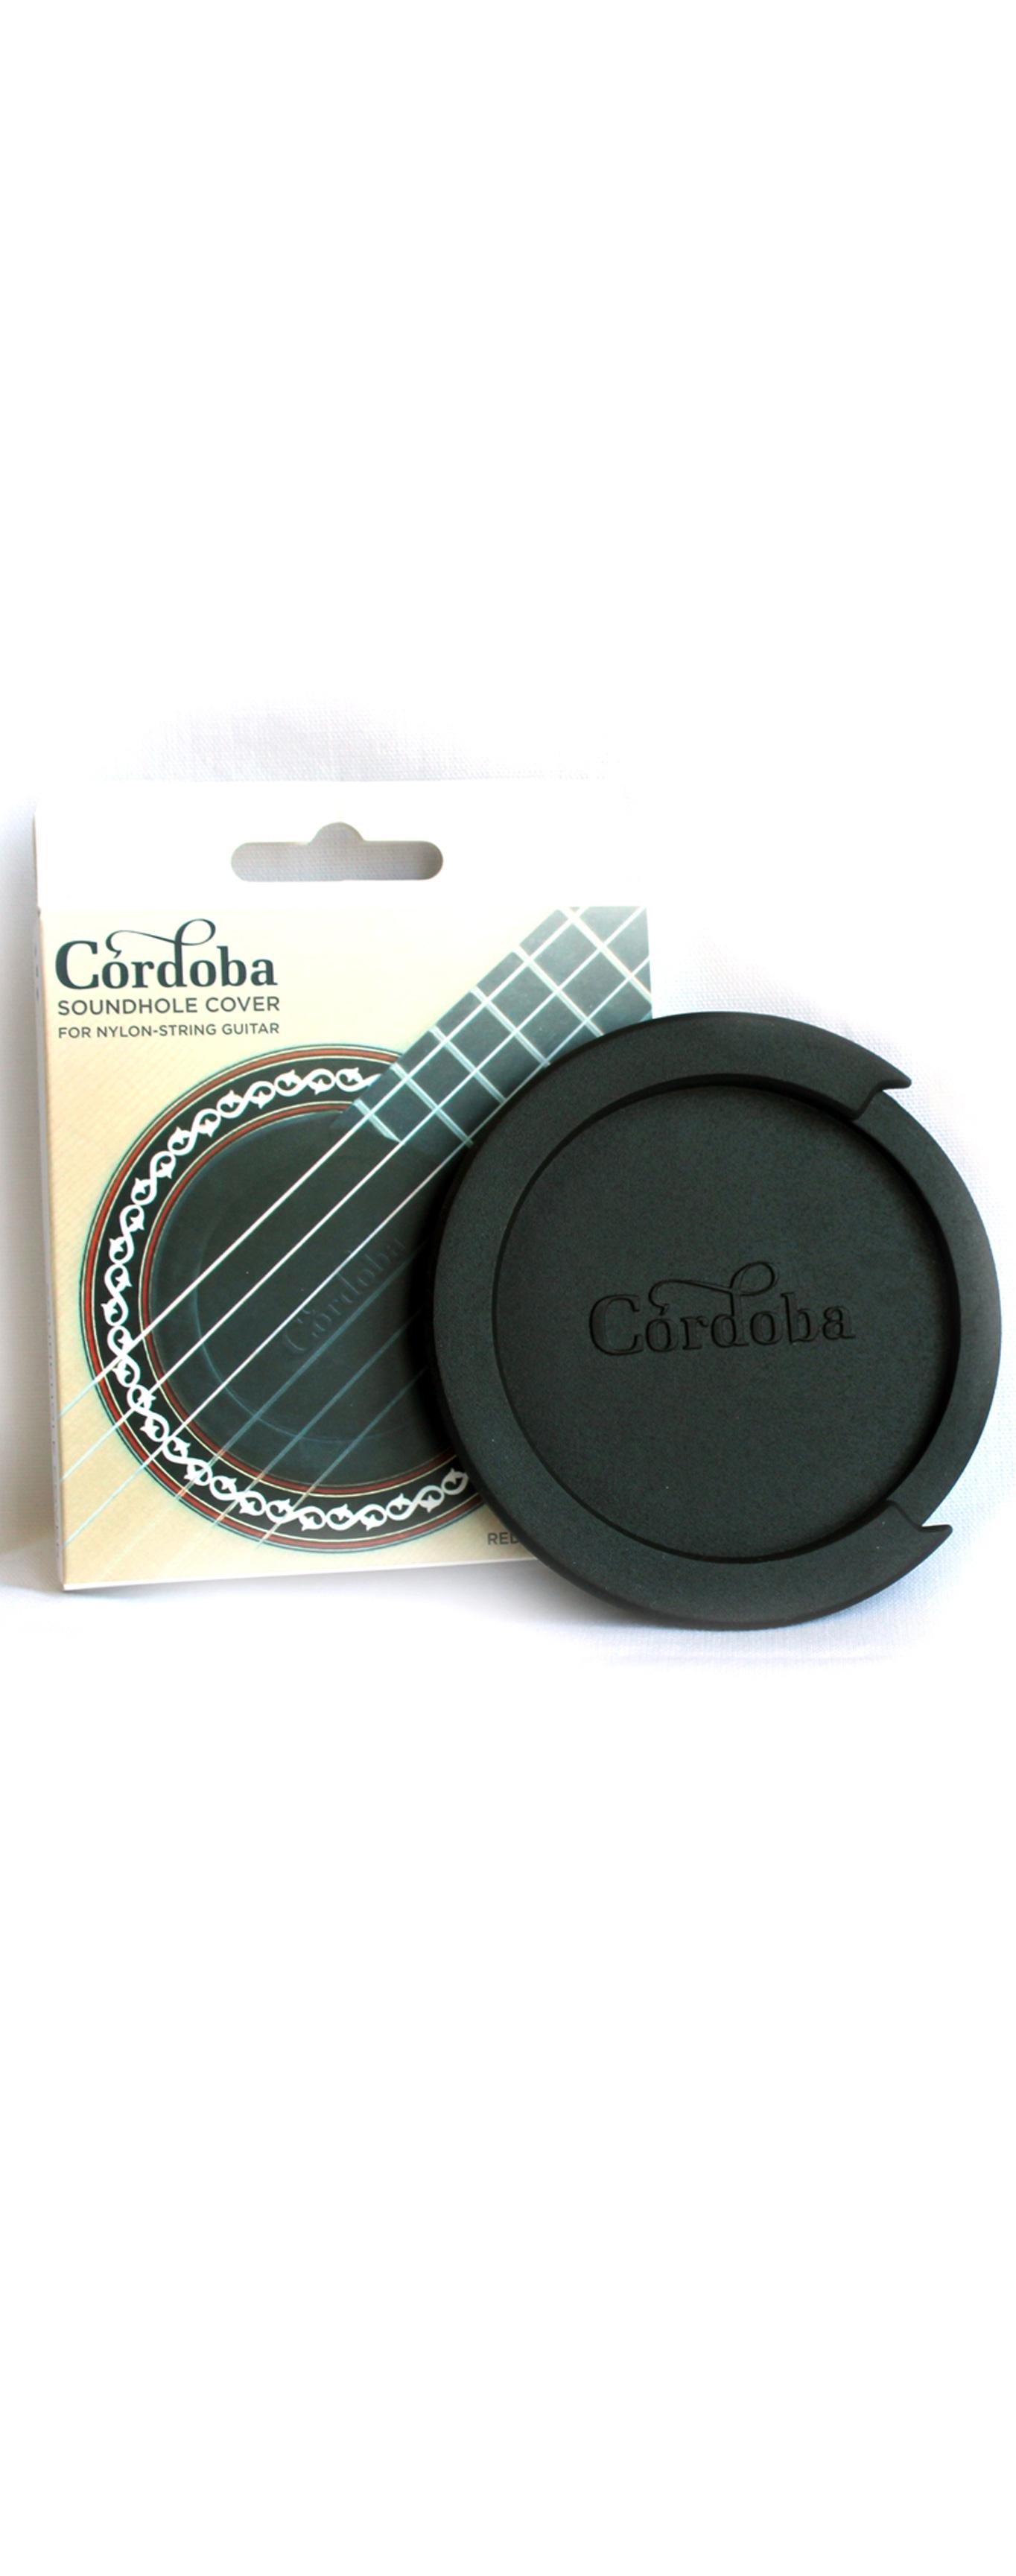 Cordoba Soundhole Cover - Schalllocheinsatz - Variation 1